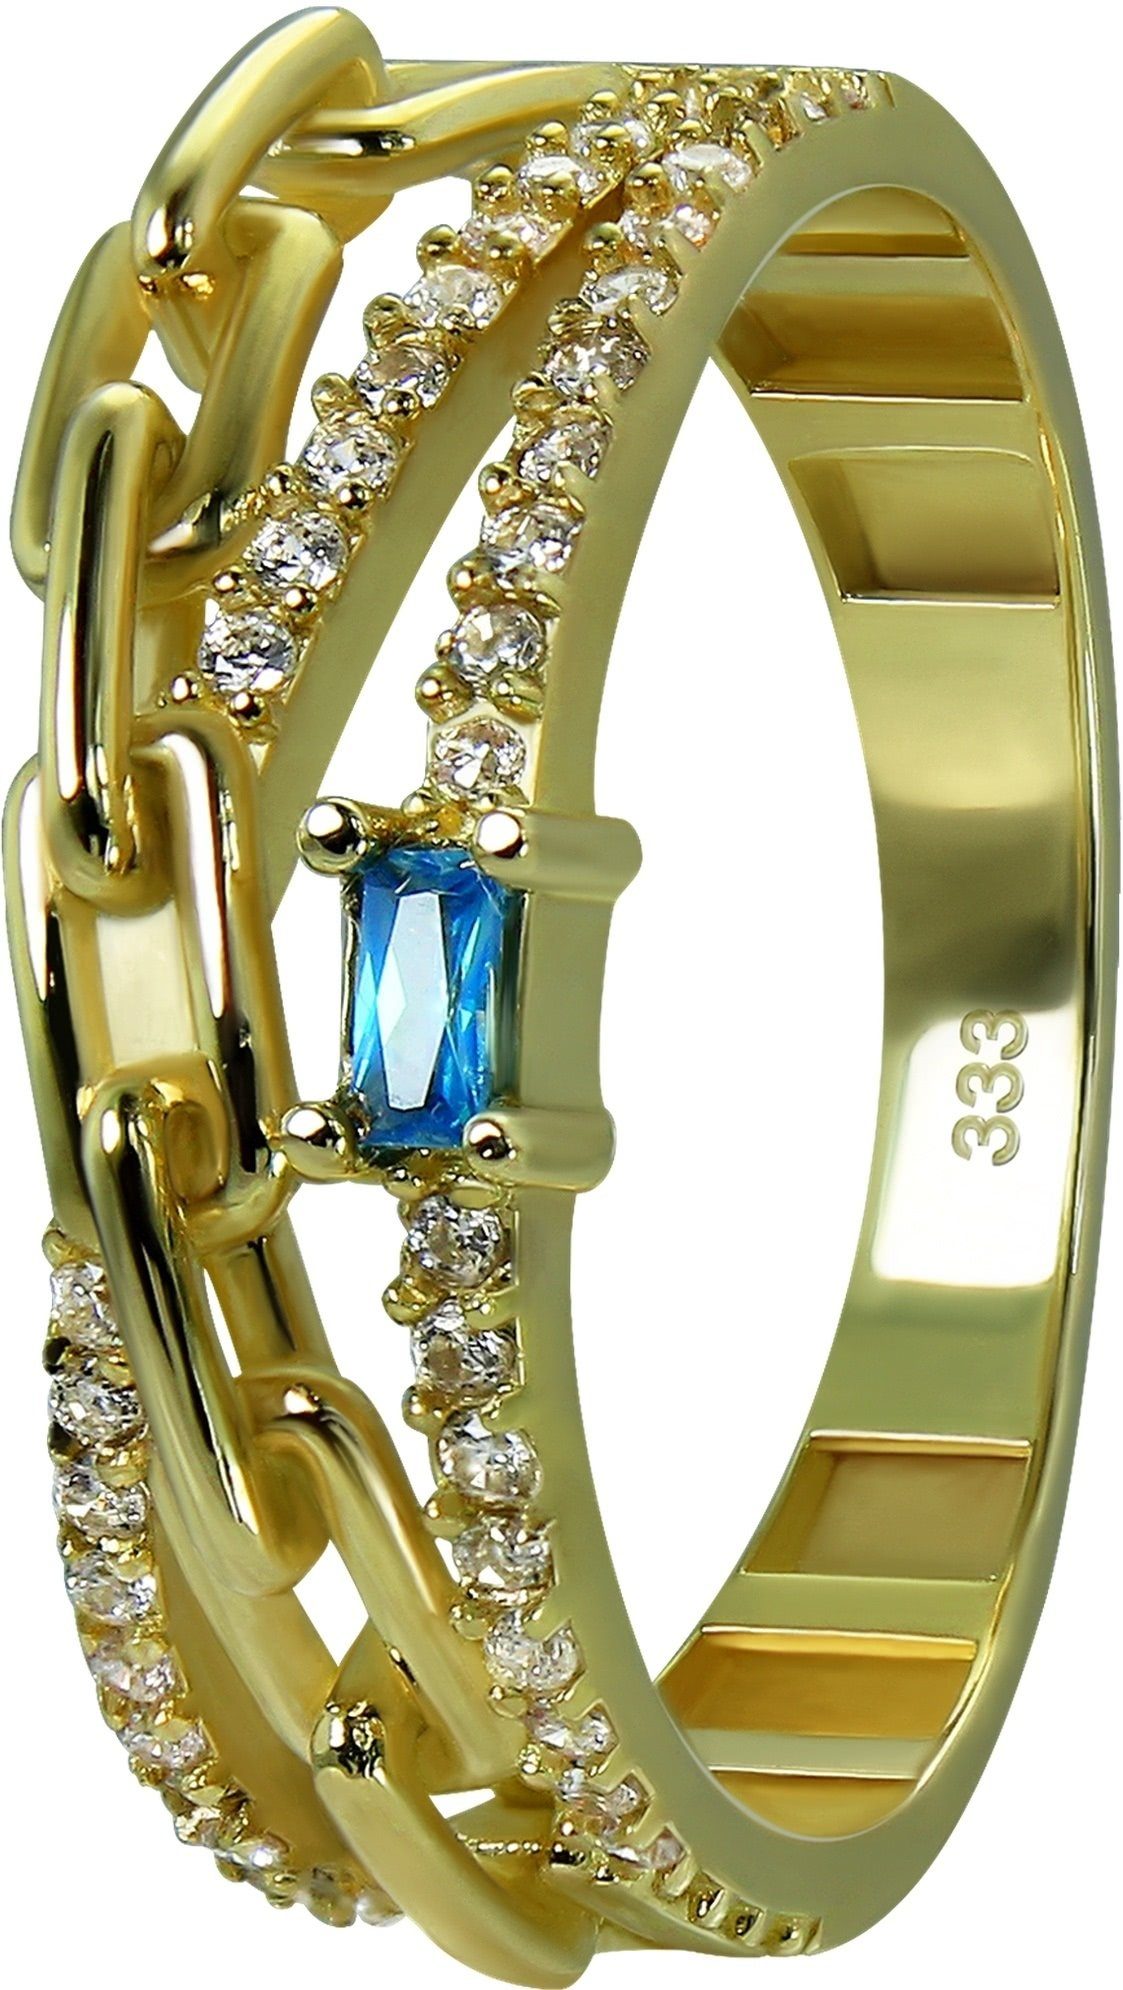 GoldDream Goldring GoldDream Gold Ring Glamour Gr.56 (Fingerring), Damen Ring Glamour 333 Gelbgold - 8 Karat, Farbe: gold, weiß, hellblau